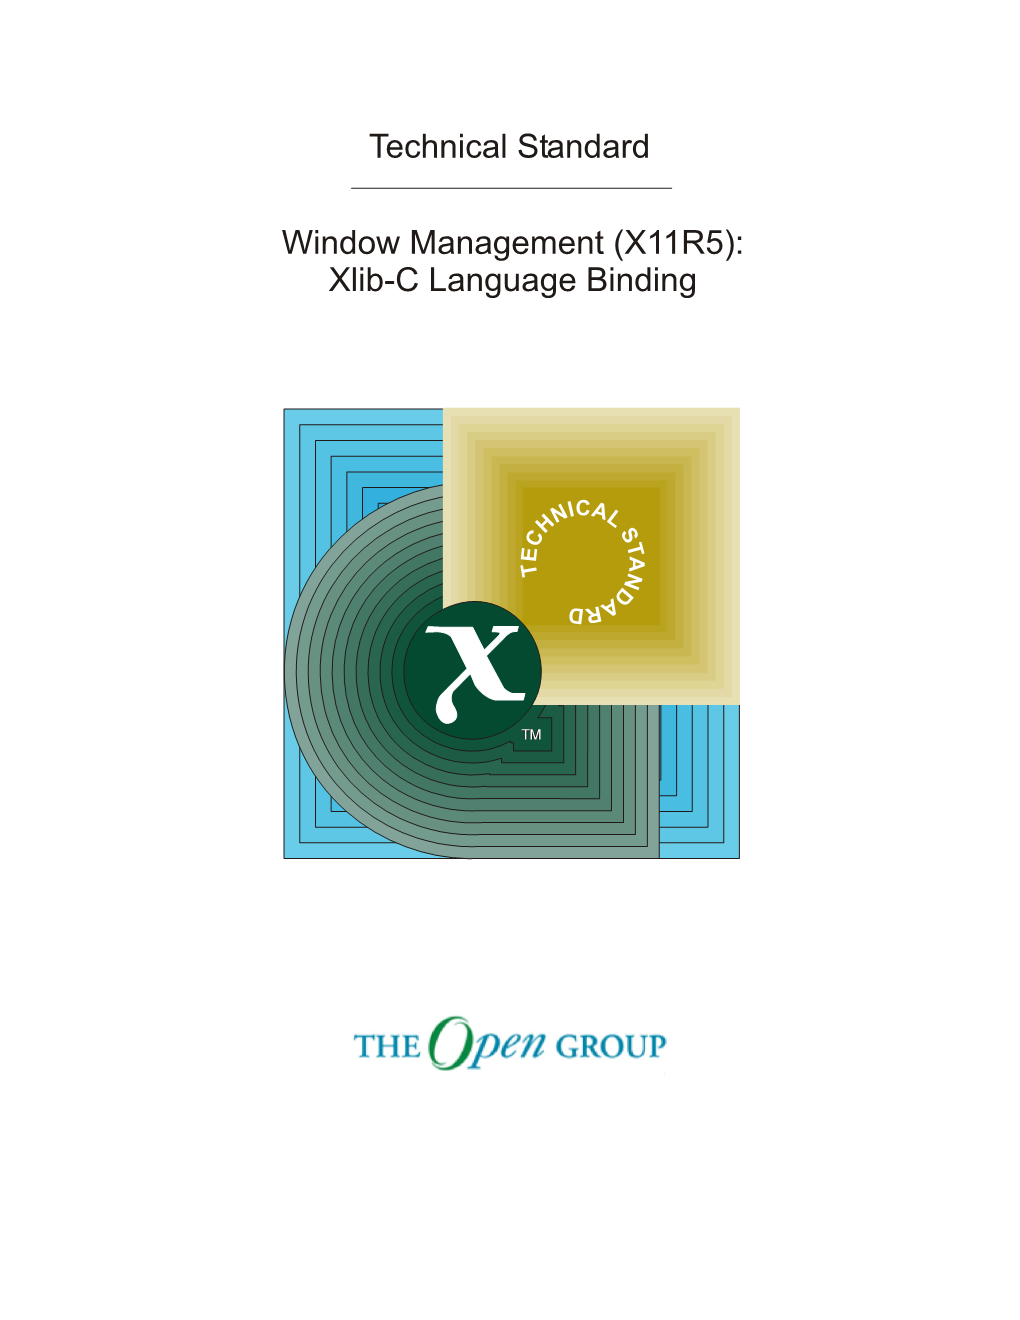 Technical Standard Window Management (X11R5): Xlib-C